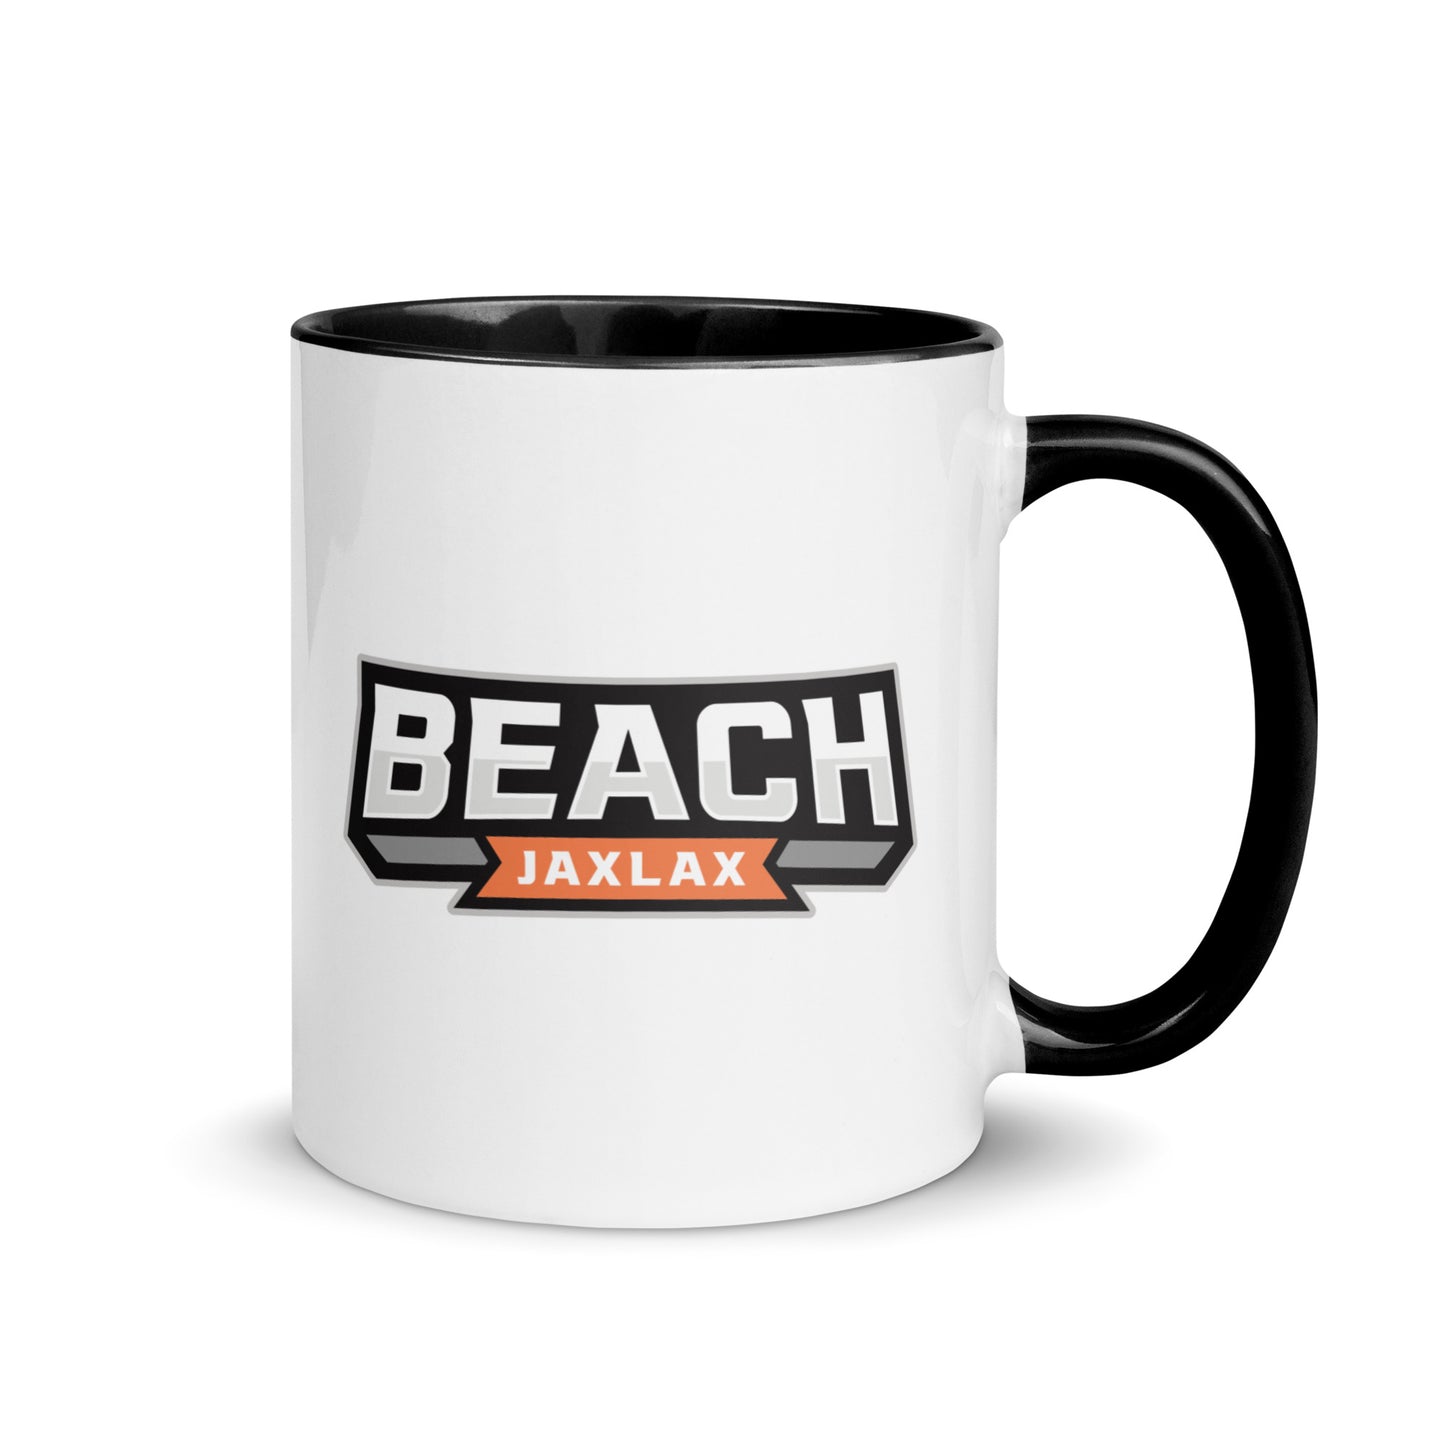 Jax Lax Beach - Mug with Color Inside